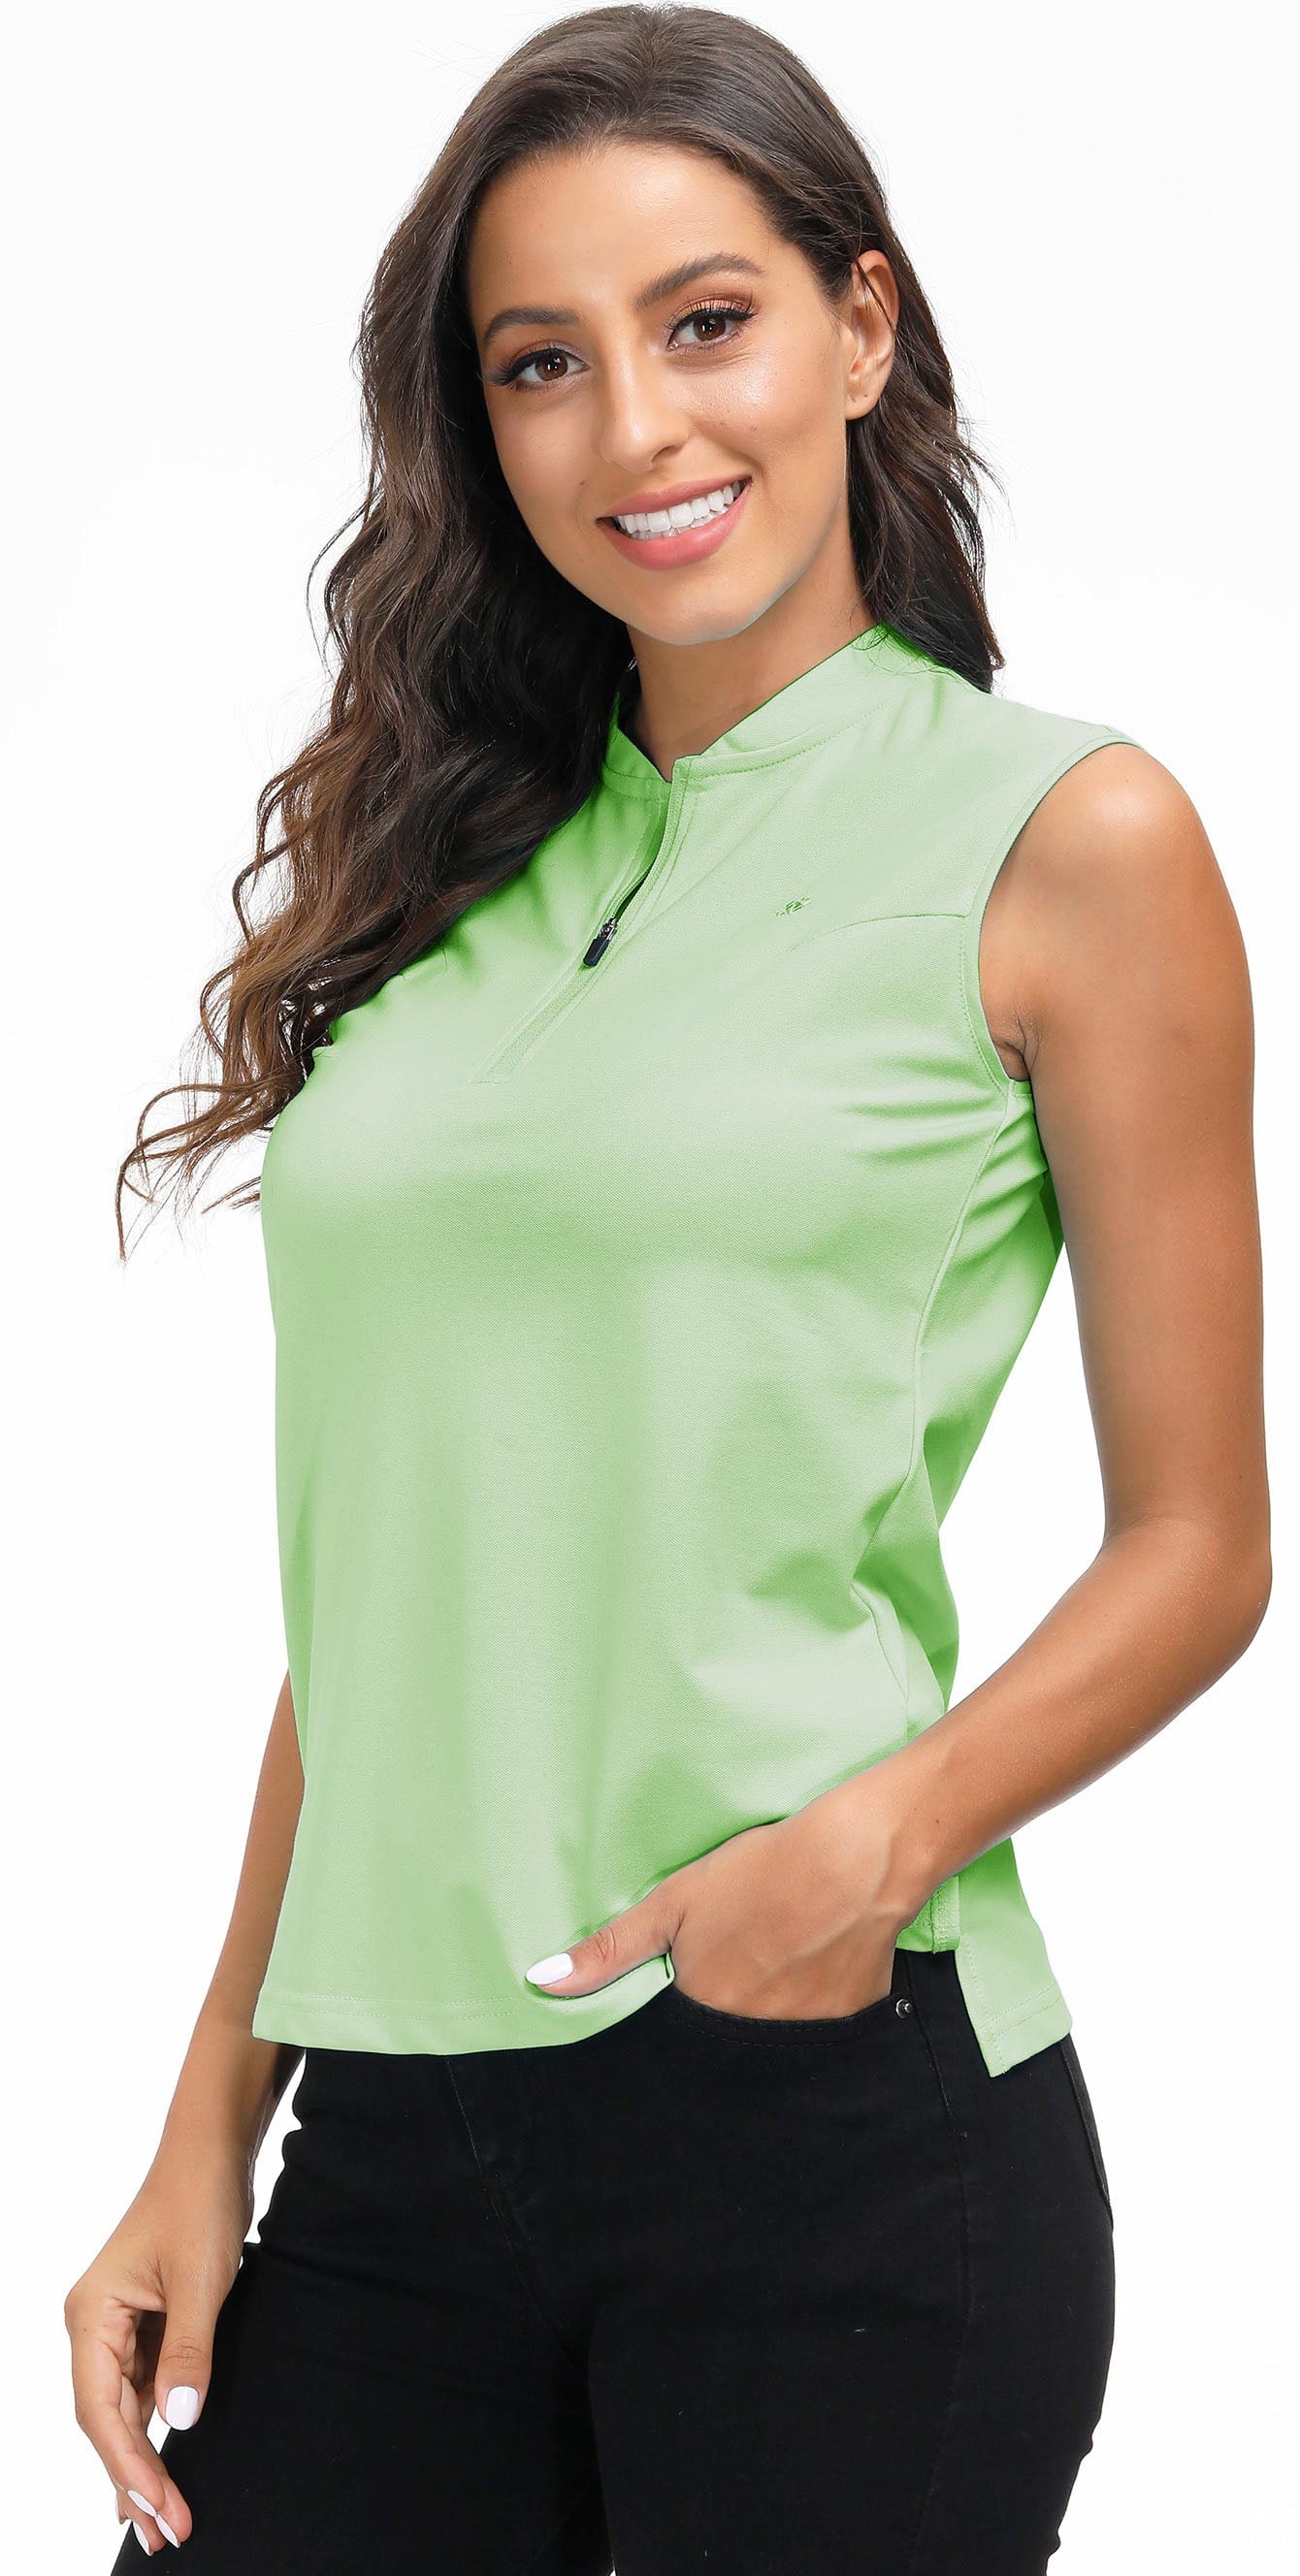 MoFiz Womens Quick Dry Short Sleeve Tee Shirt Lightweight Athletic Running Active Outdoor Tennis Tops 